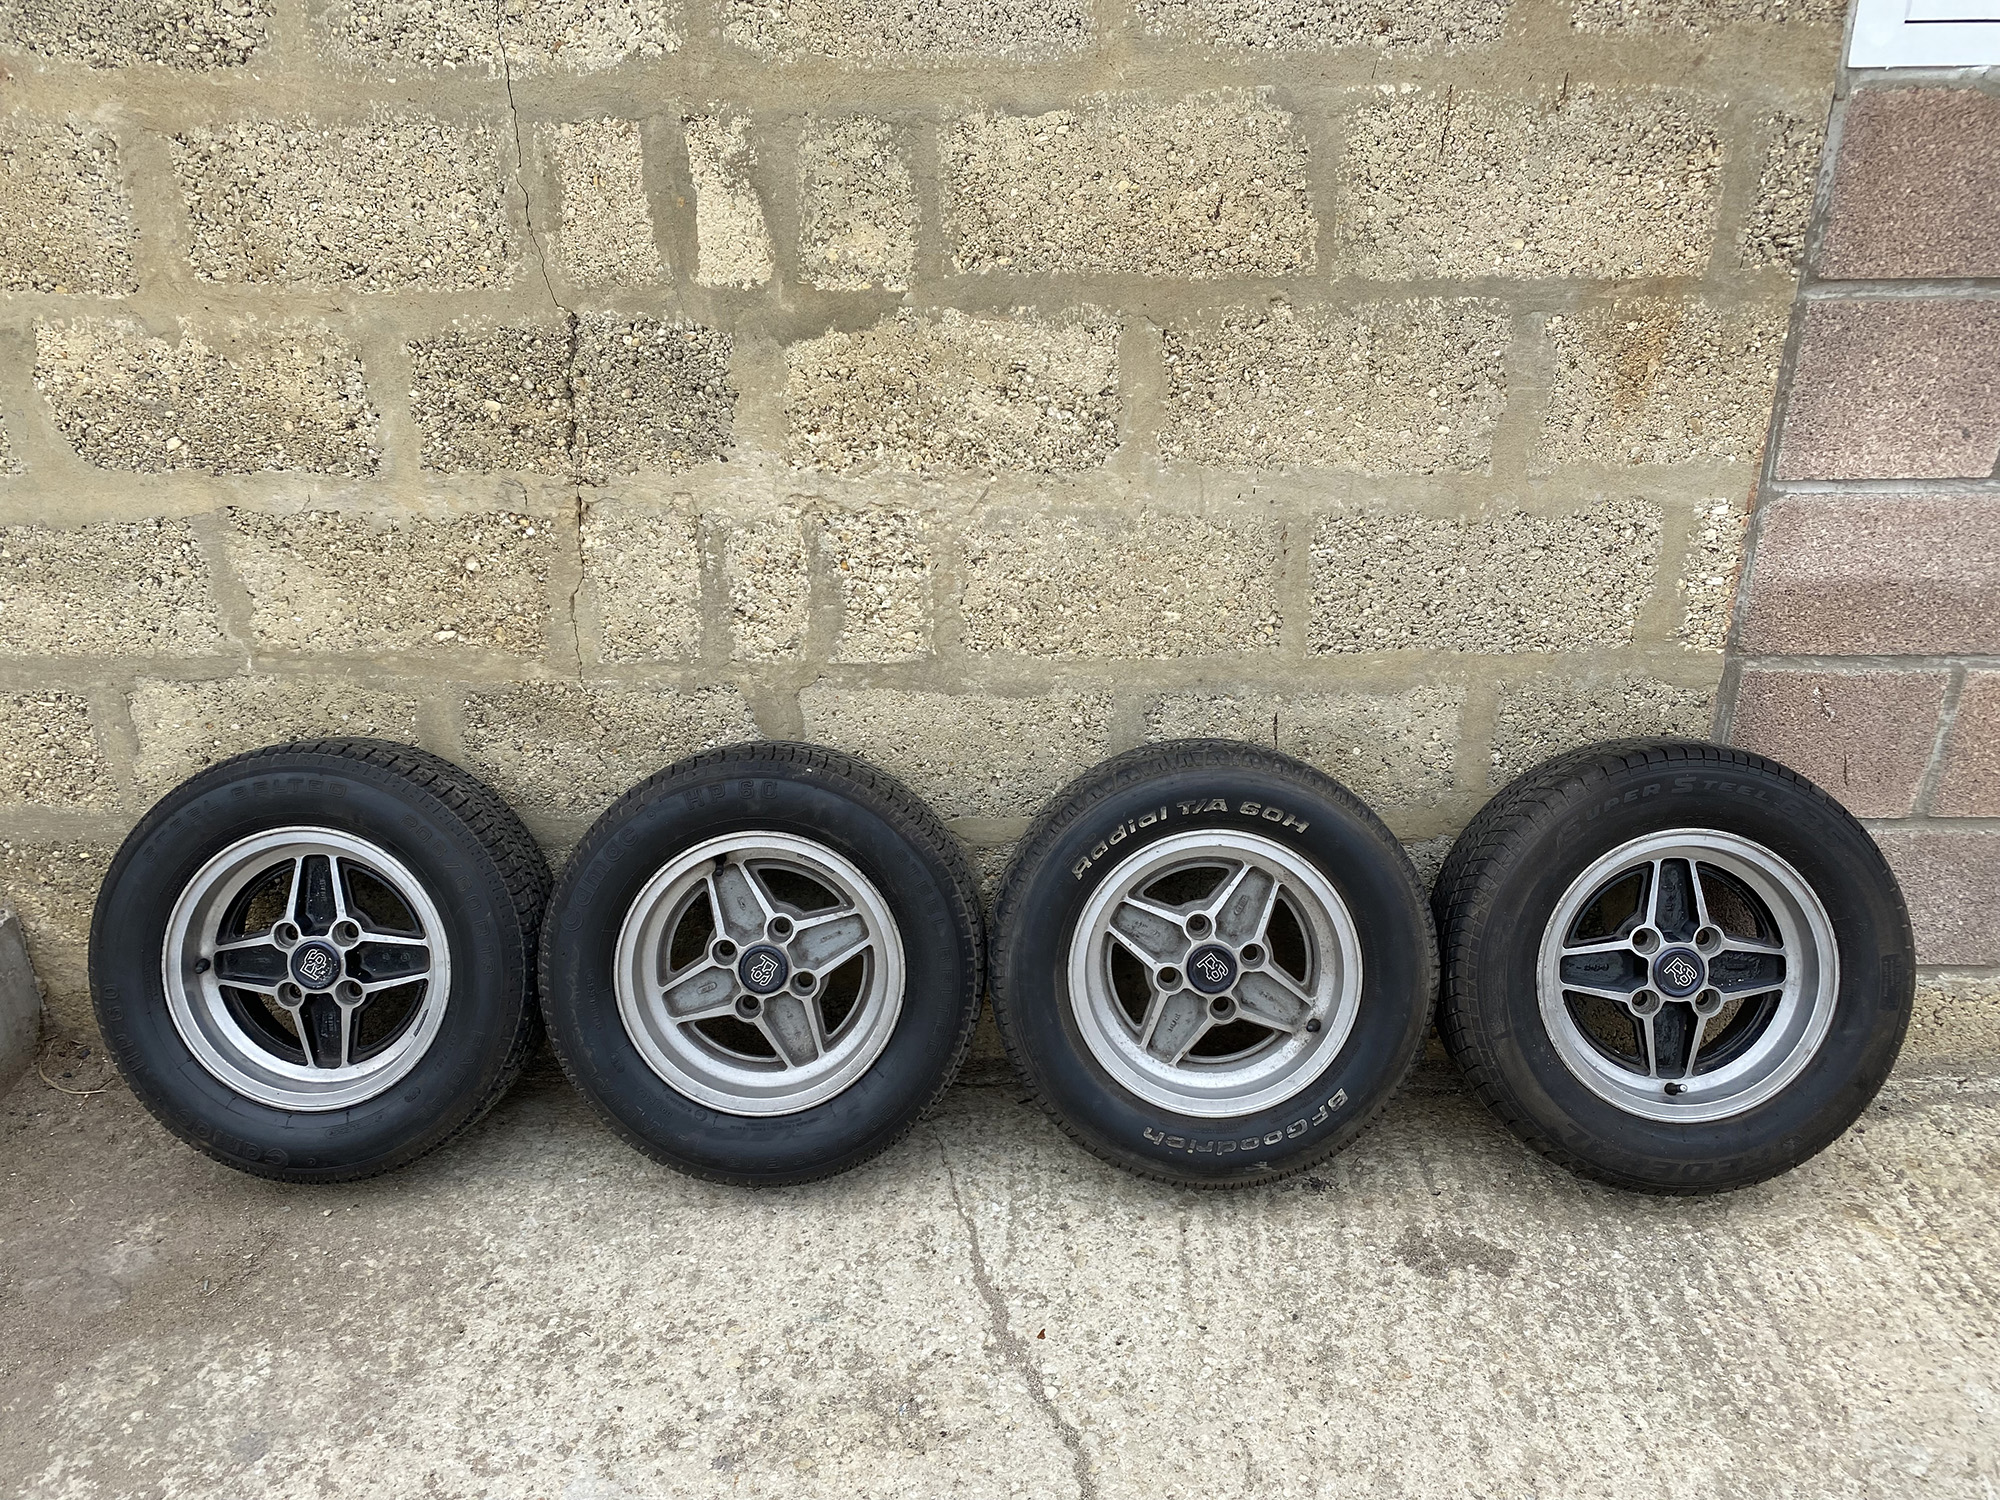 A genuine set of four RS 2000 four spoke wheels, manufactured 1979, 13 x 6J, centre